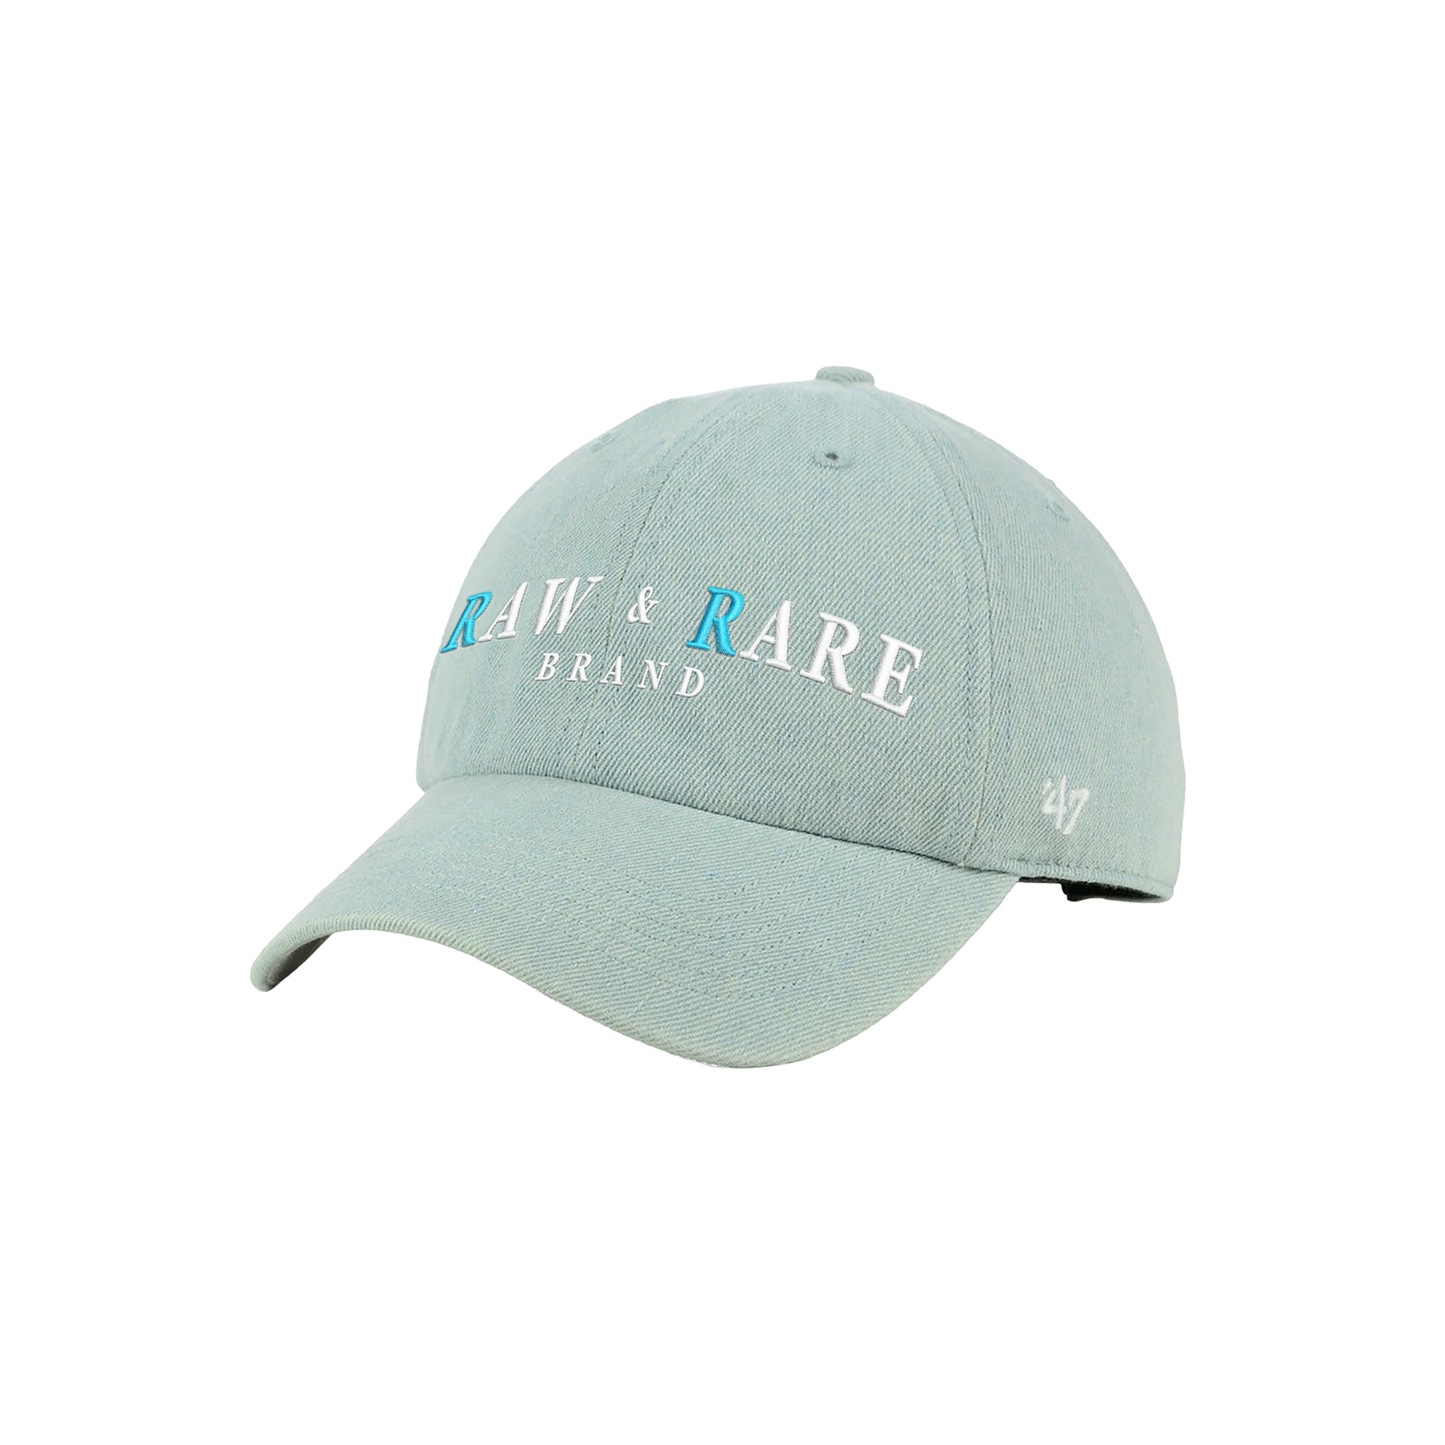 Raw & Rare Brand denim dad hat